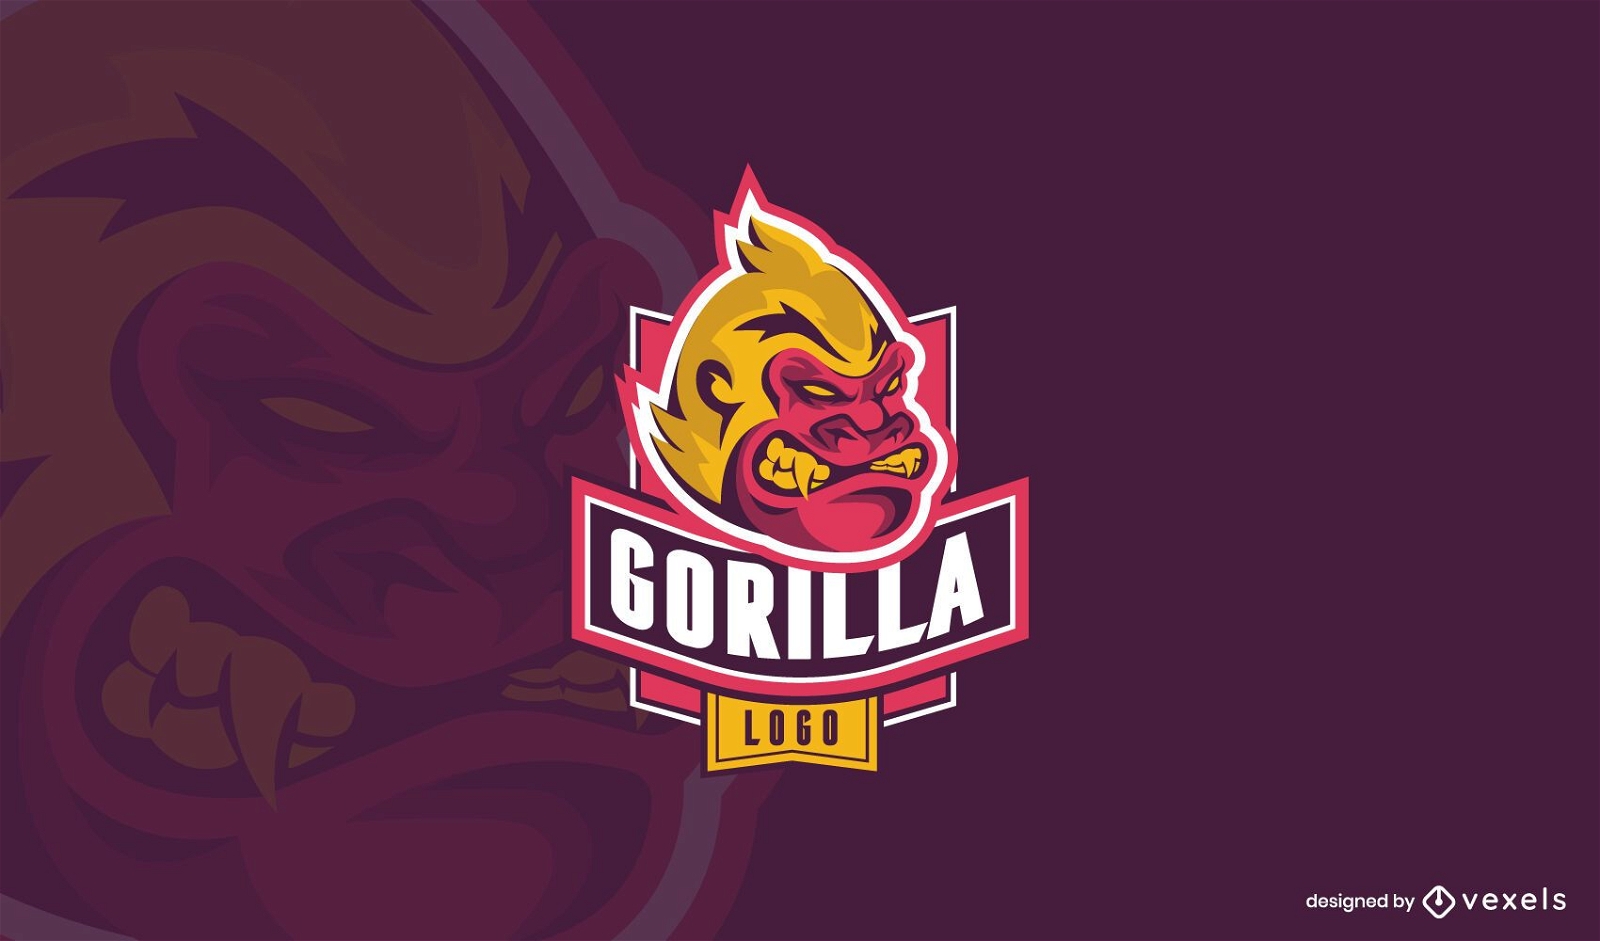 Gorilla monkey logo design